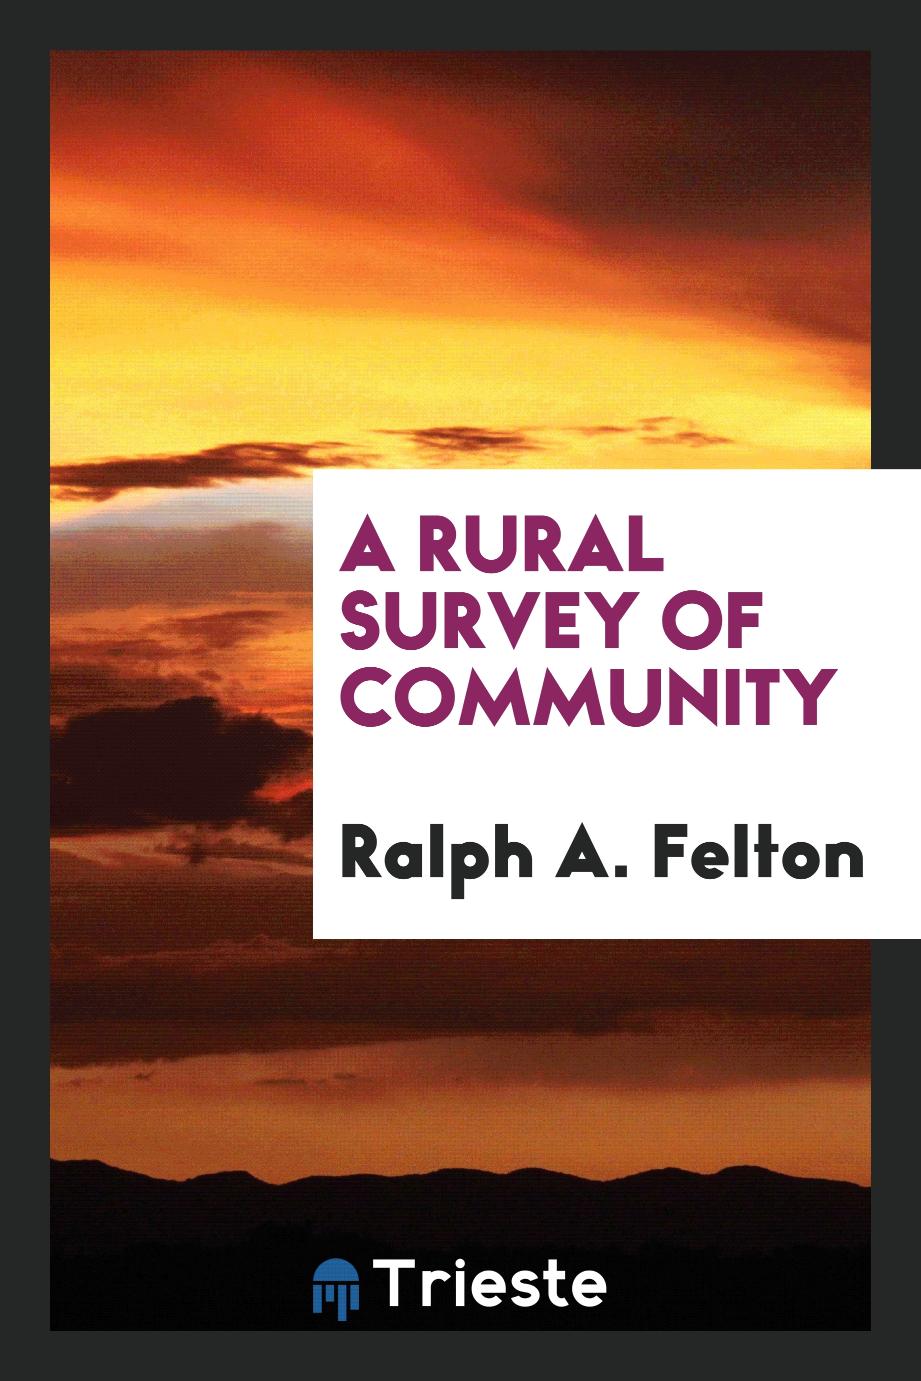 A rural survey of community